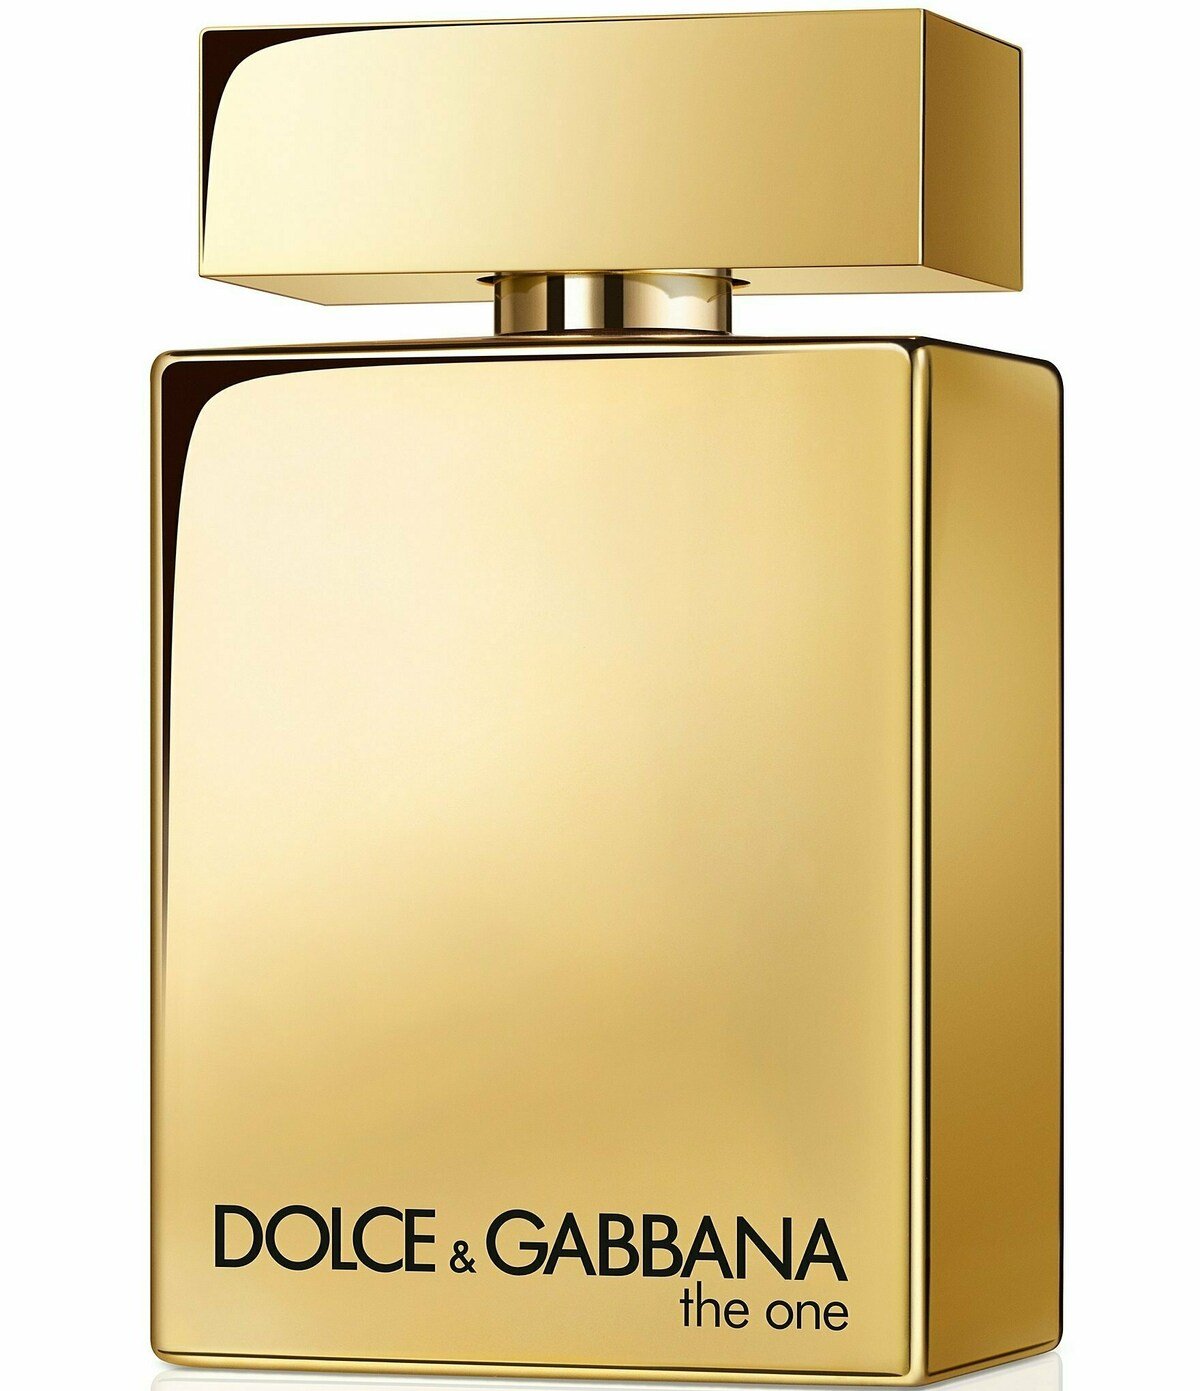 Verdrag Plak opnieuw Penetratie The One for Men Gold by Dolce & Gabbana » Reviews & Perfume Facts